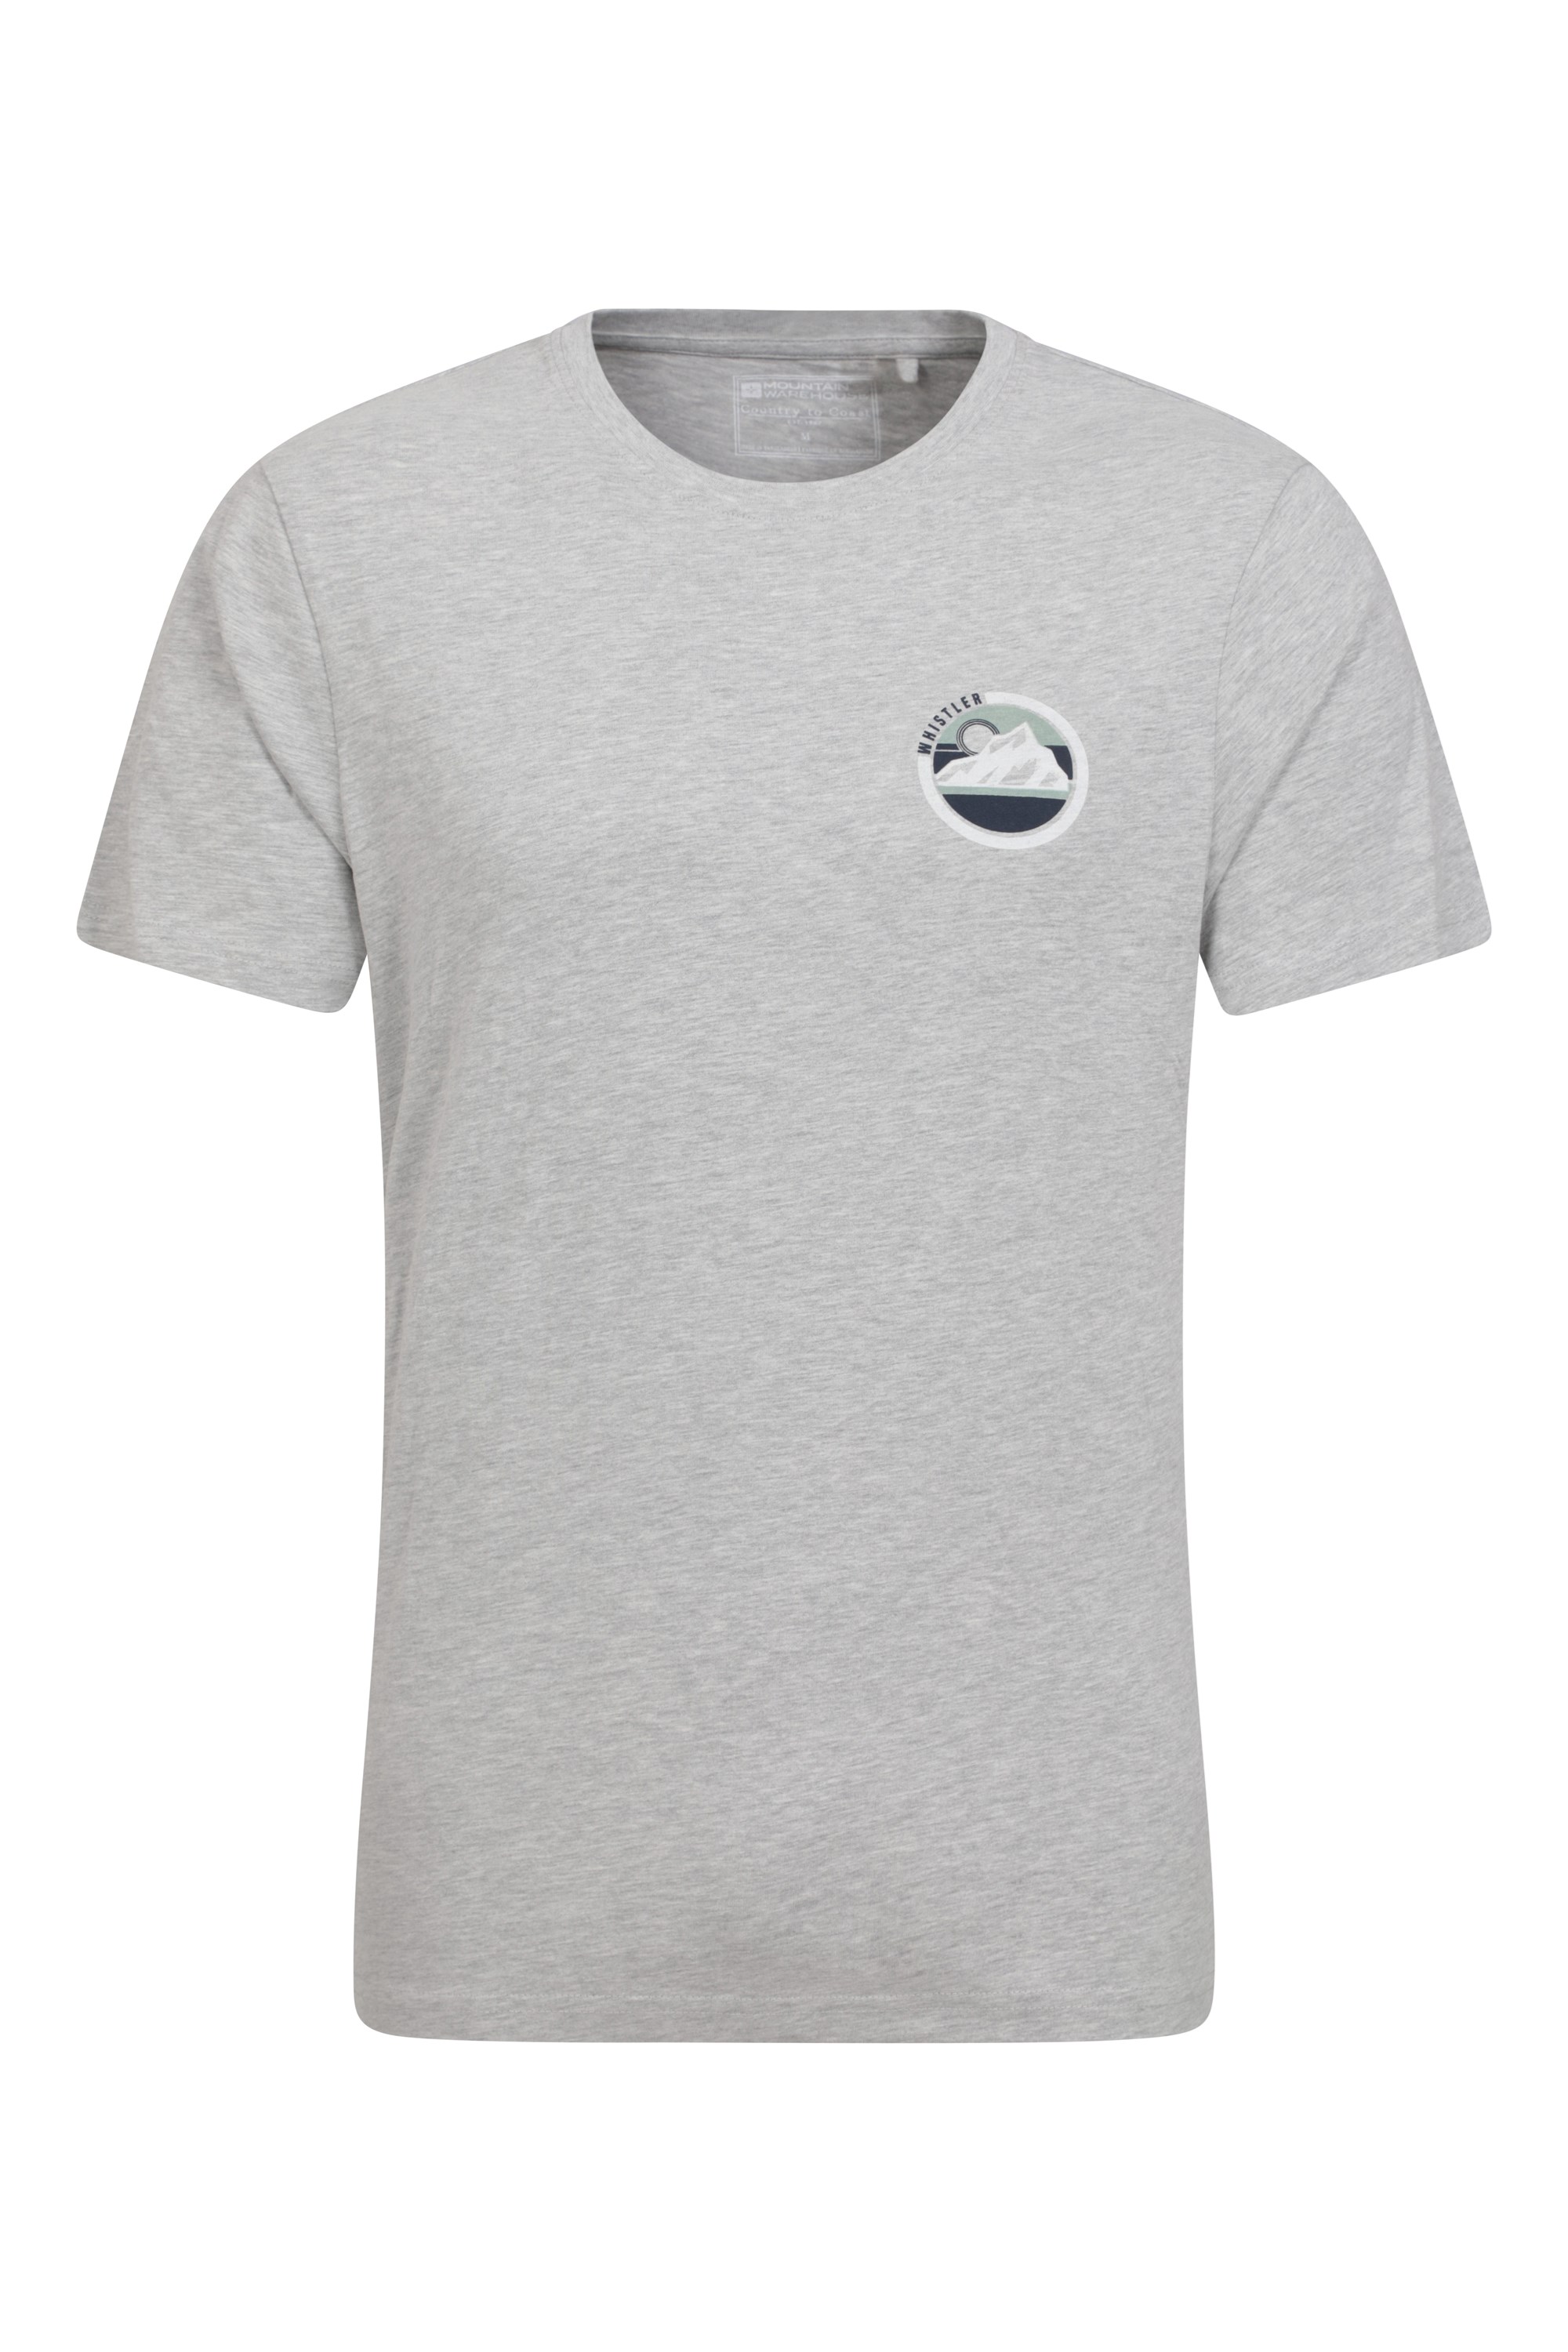 whistler mountain mens t-shirt - grey